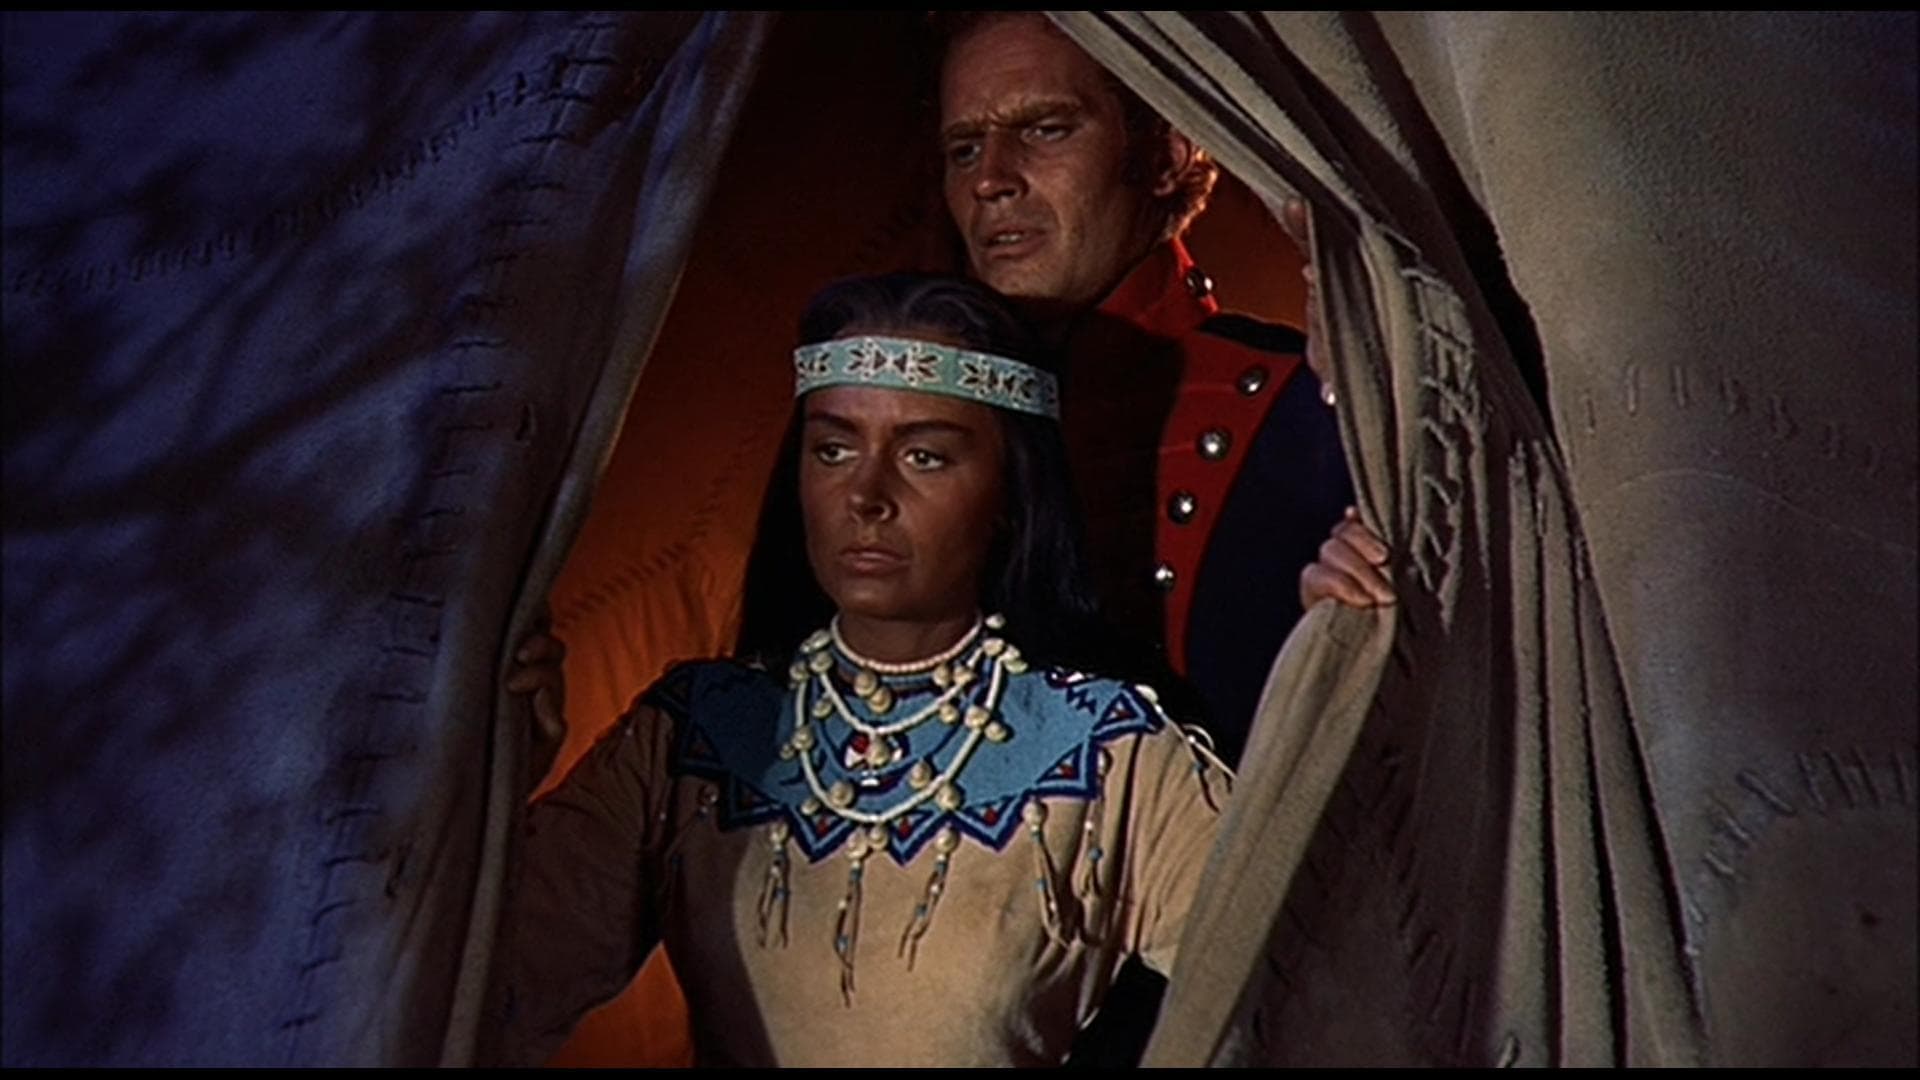 The Far Horizons (1955)